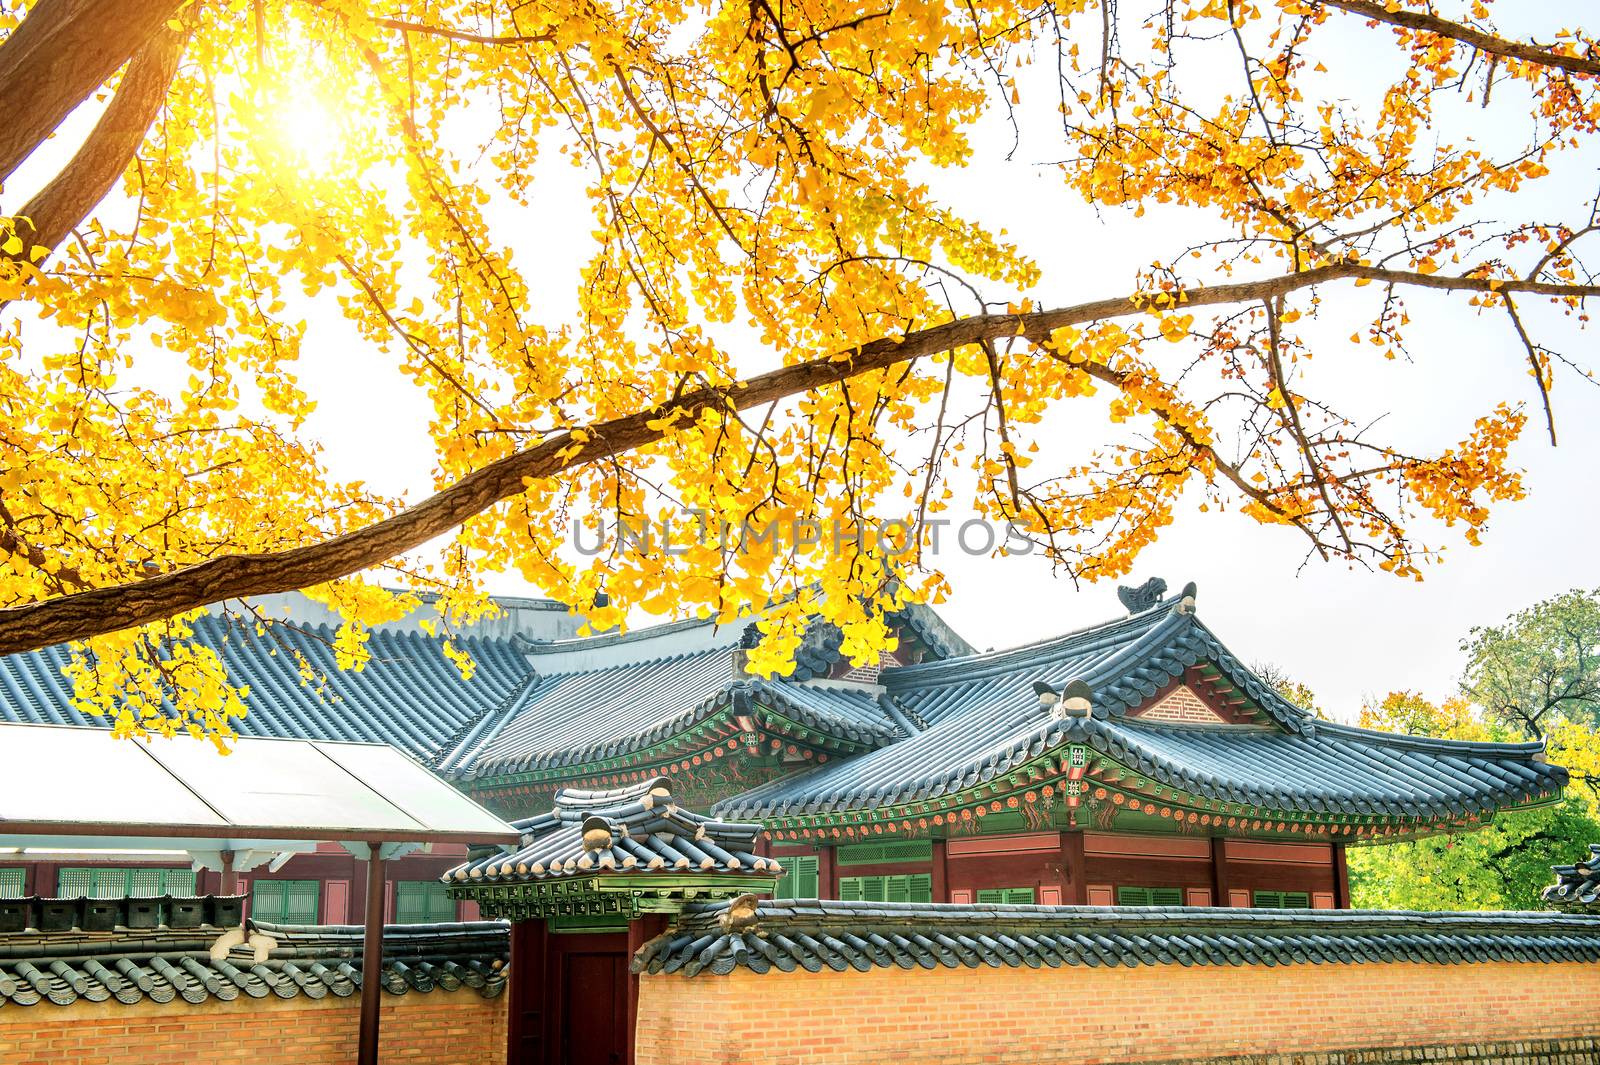 Autumn in Gyeongbukgung Palace,Korea. by gutarphotoghaphy